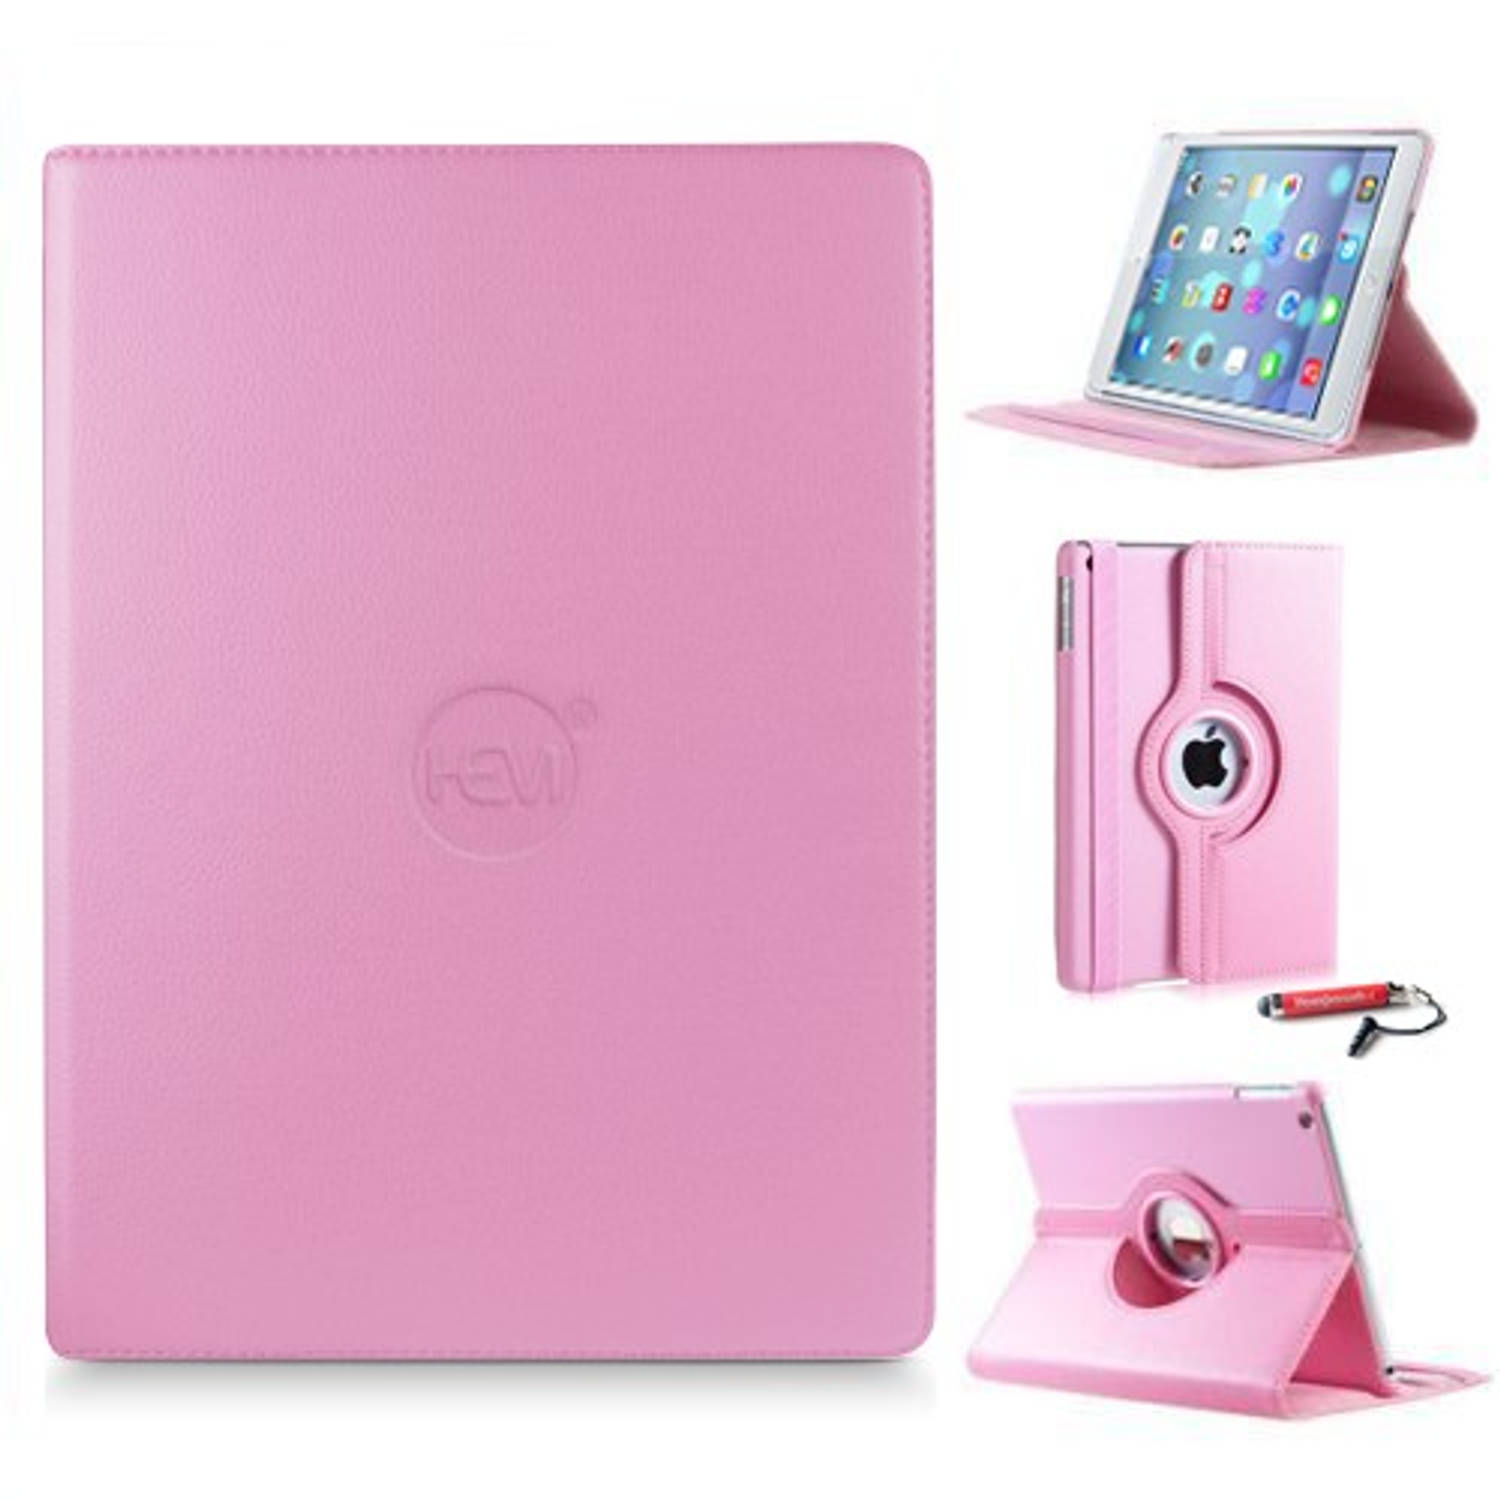 iPad hoes mini 1/2/3 HEM Cover licht roze met uitschuifbare Hoesjesweb stylus - Ipad hoes, Tablethoes